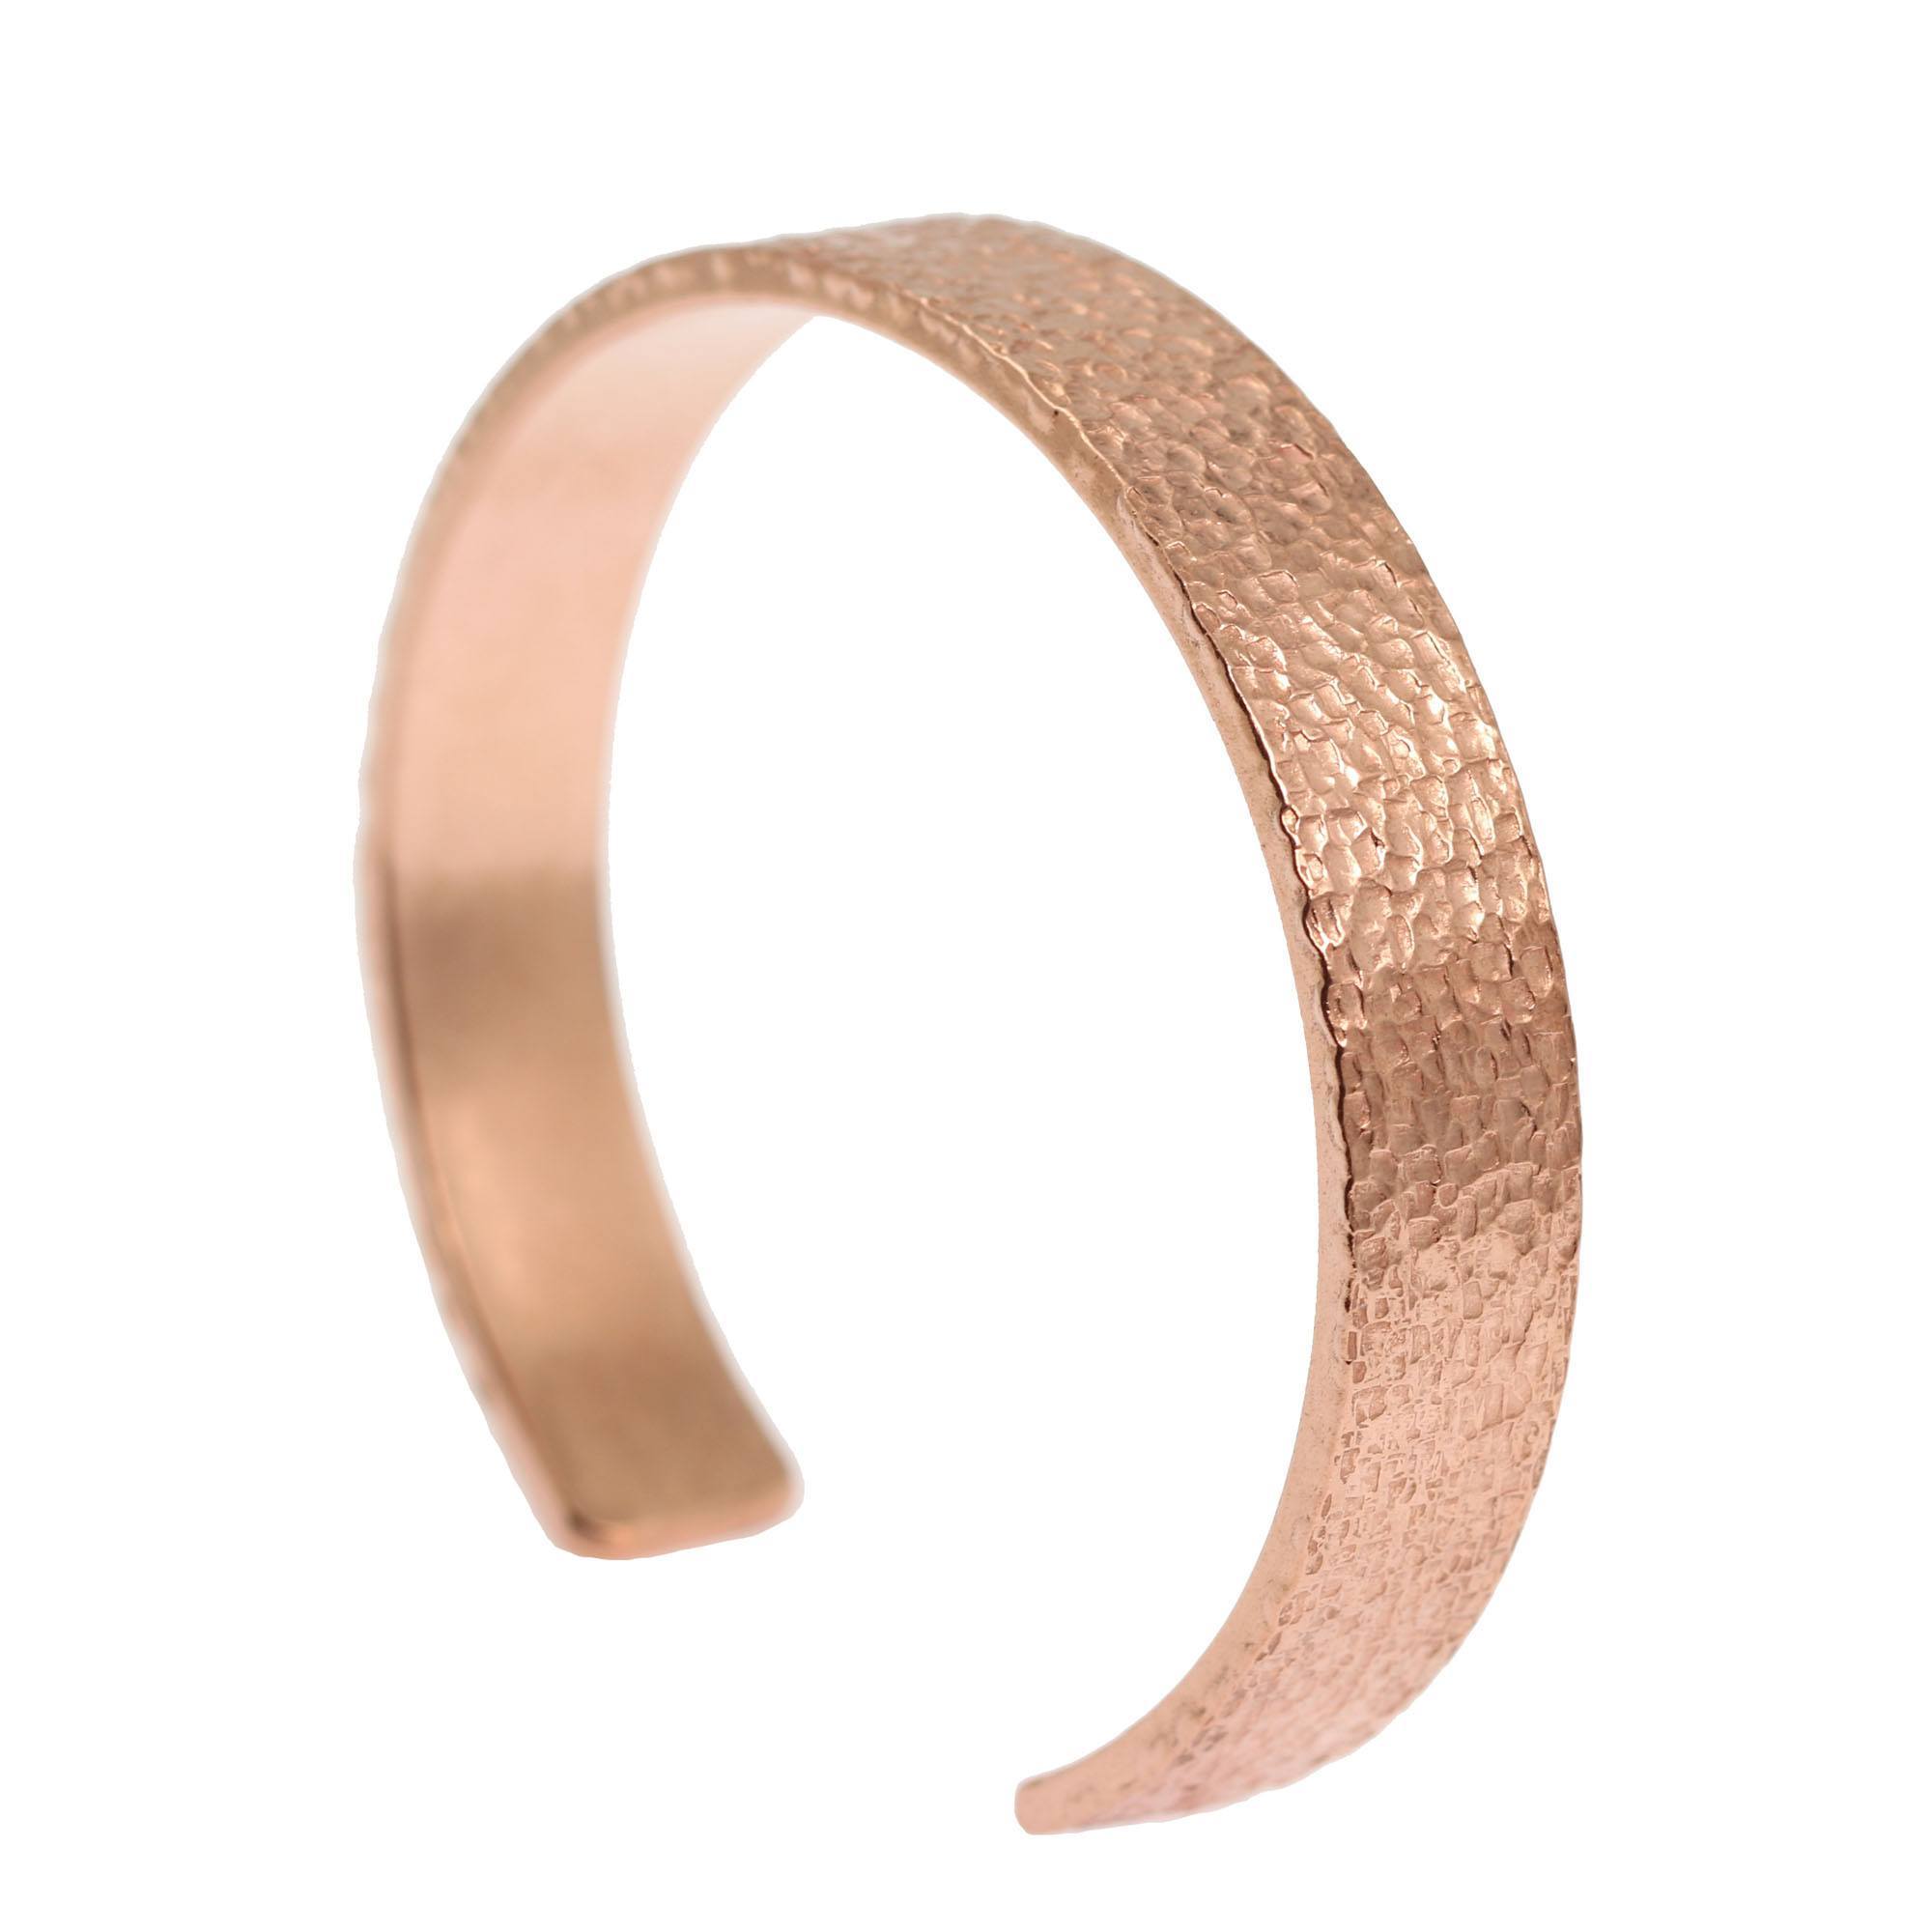 10mm Wide Men's Texturized Copper Cuff Bracelet